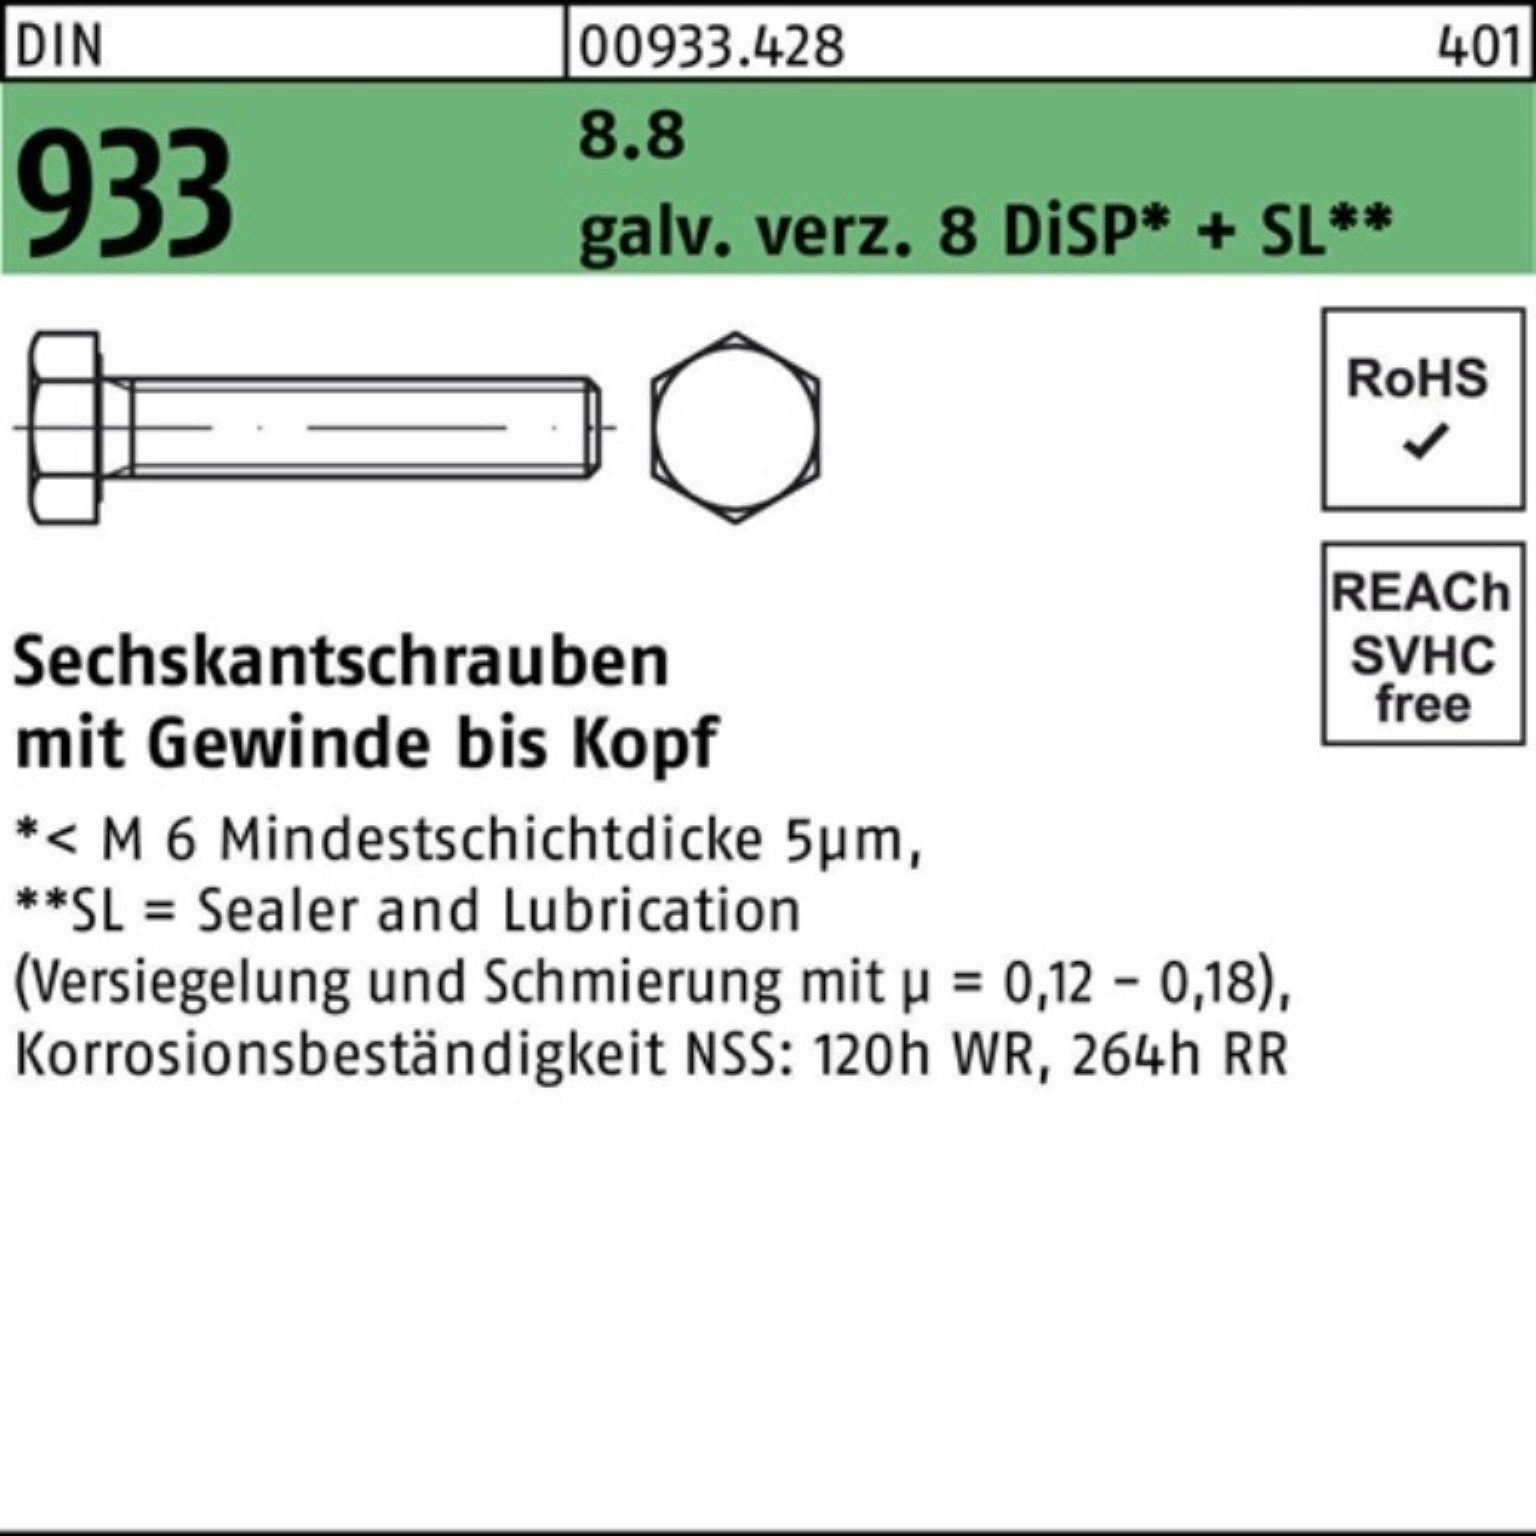 Reyher Sechskantschraube 100er M24x Pack DIN SL DiSP VG Sechskantschraube 8.8 + 8 Zn 55 933 gal